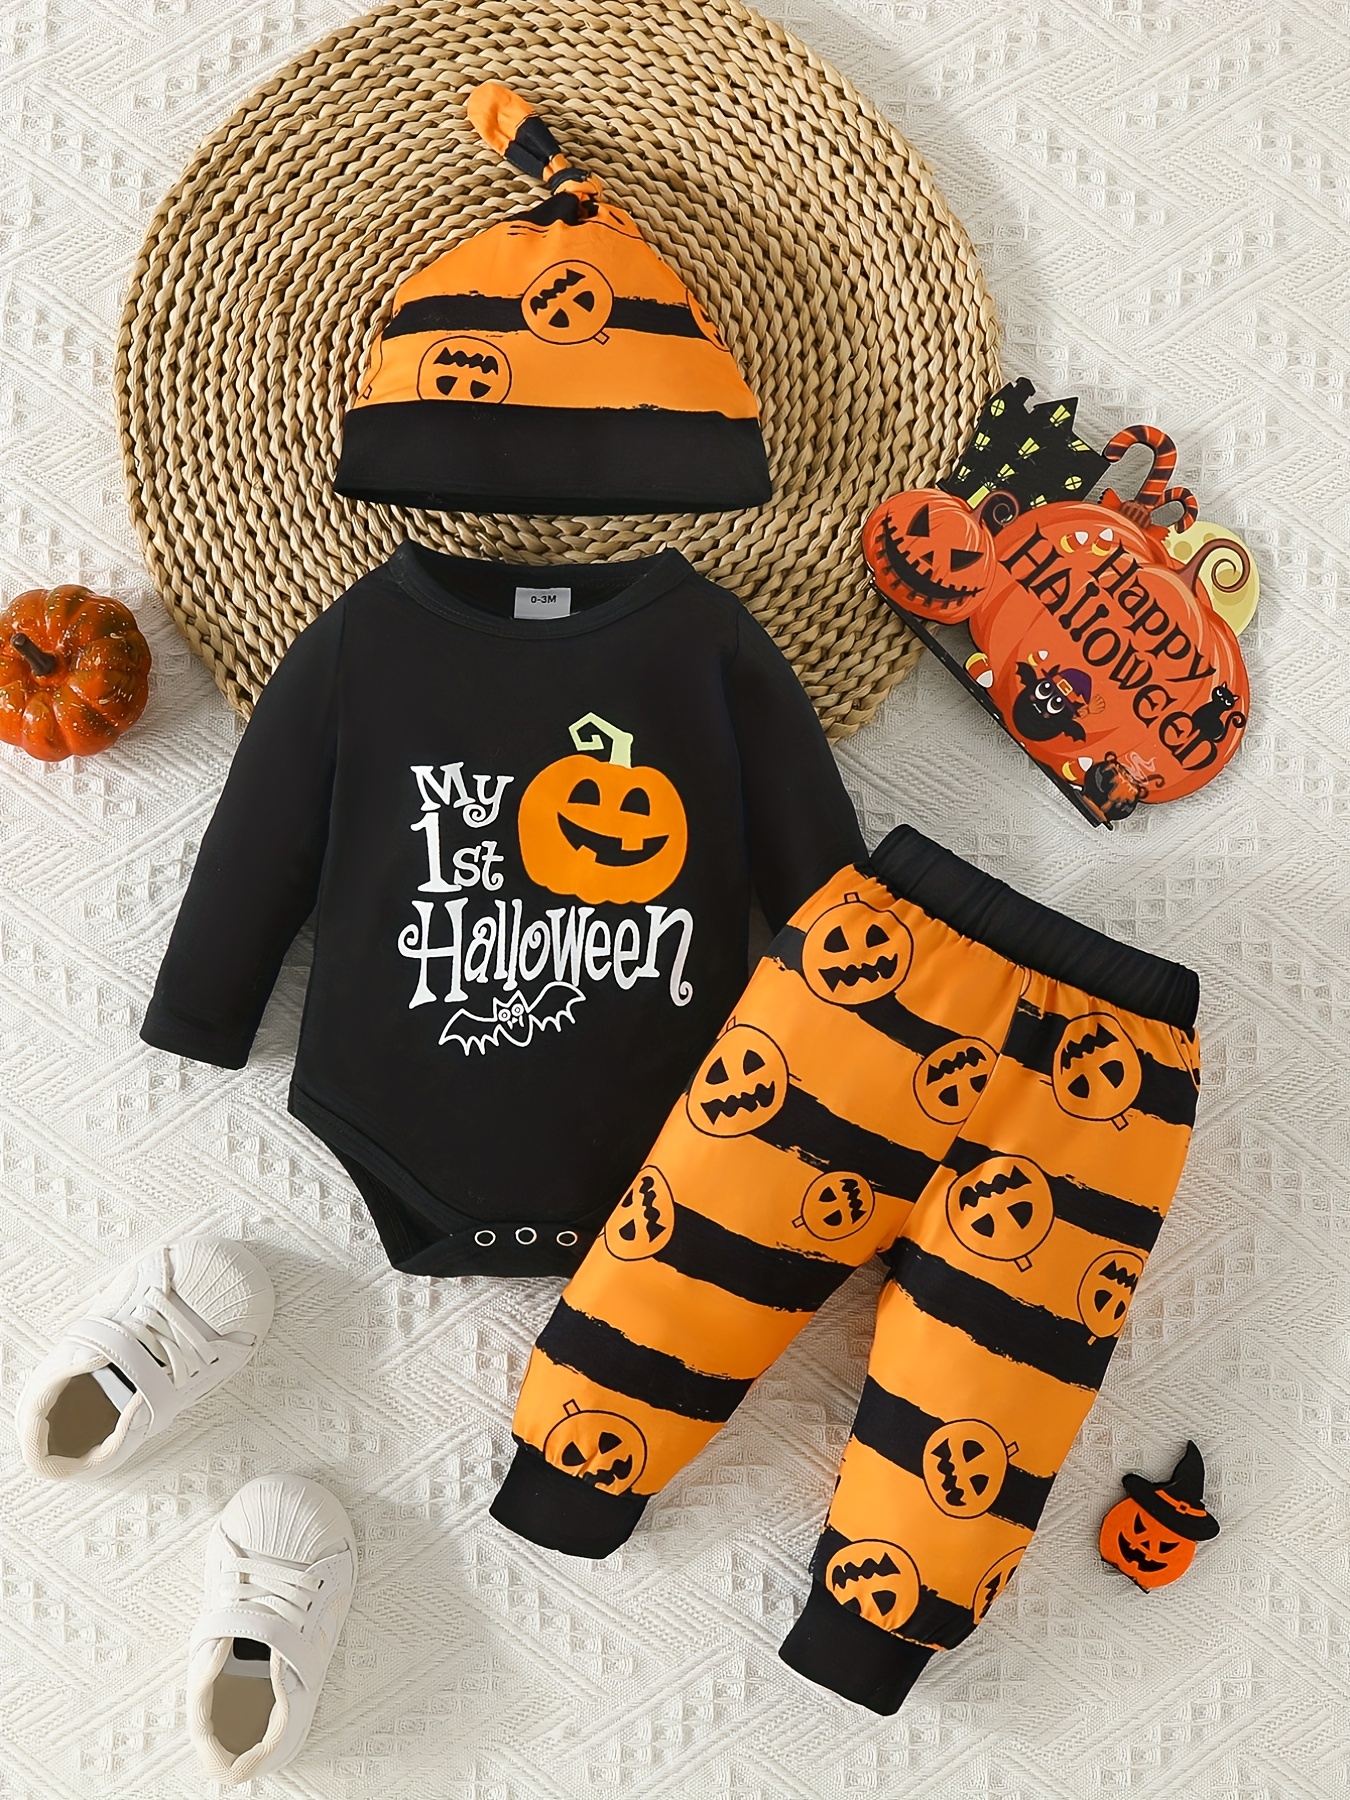 Bebés Halloween Disfraces Bebé Witch Fantasma Pumpkin Disfraz 3-12 Meses